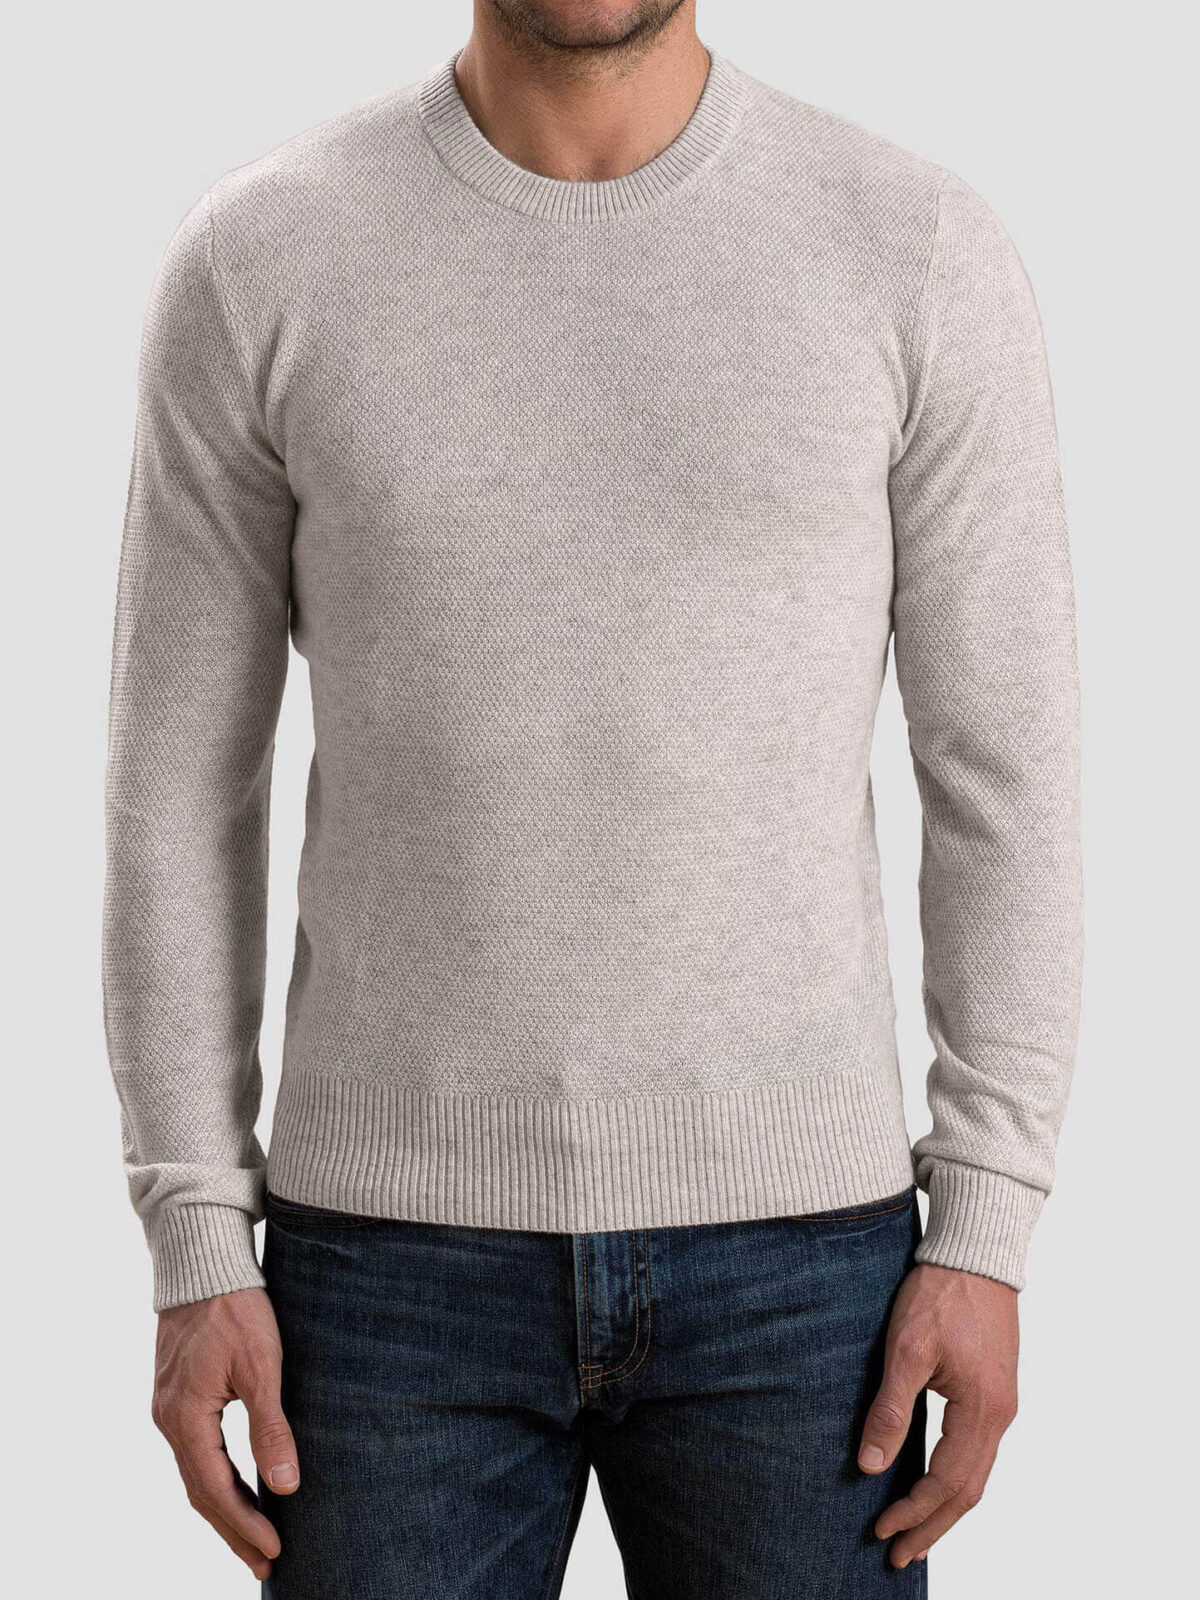 Wheat Cobble Stitch Cashmere Crewneck Sweater by Proper Cloth